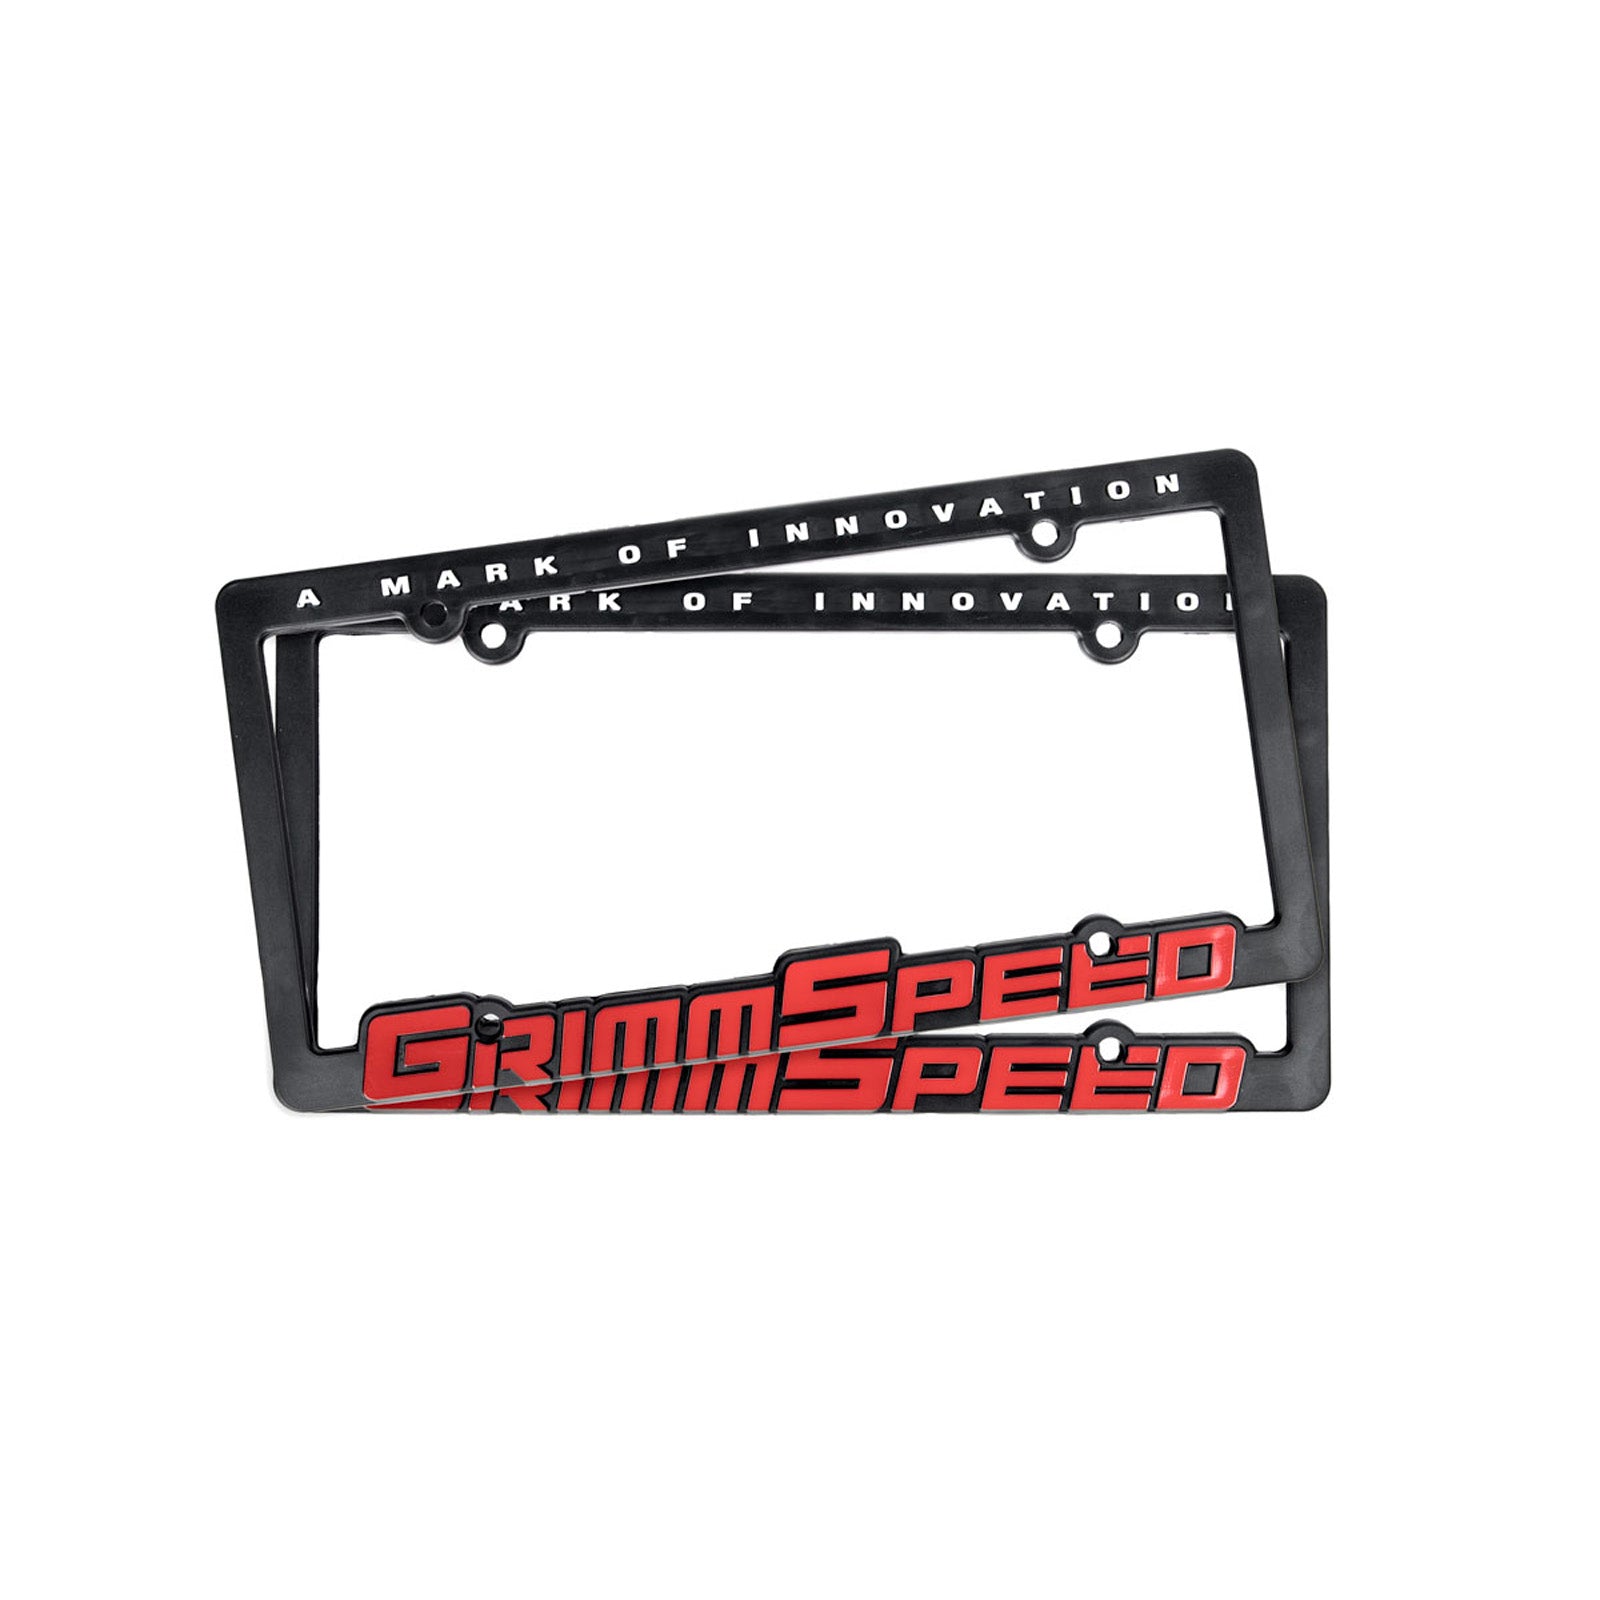 Buy red-pair GrimmSpeed License Plate Frames